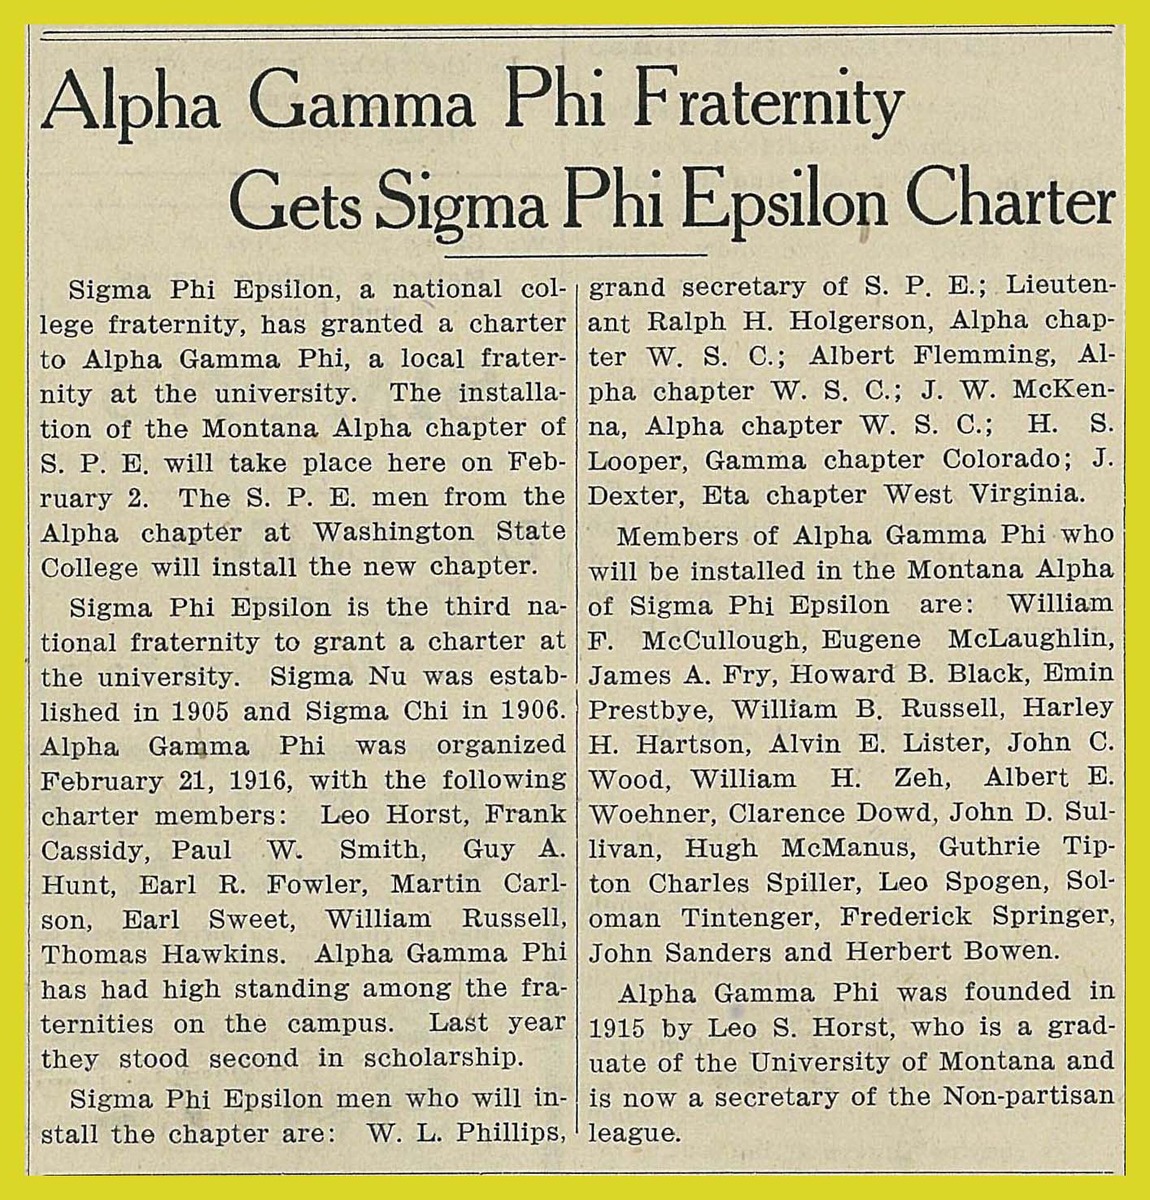 Alpha Gamma Phi Fraternity Gets Sigma Phi Epsilon Charter, page 1<br />
